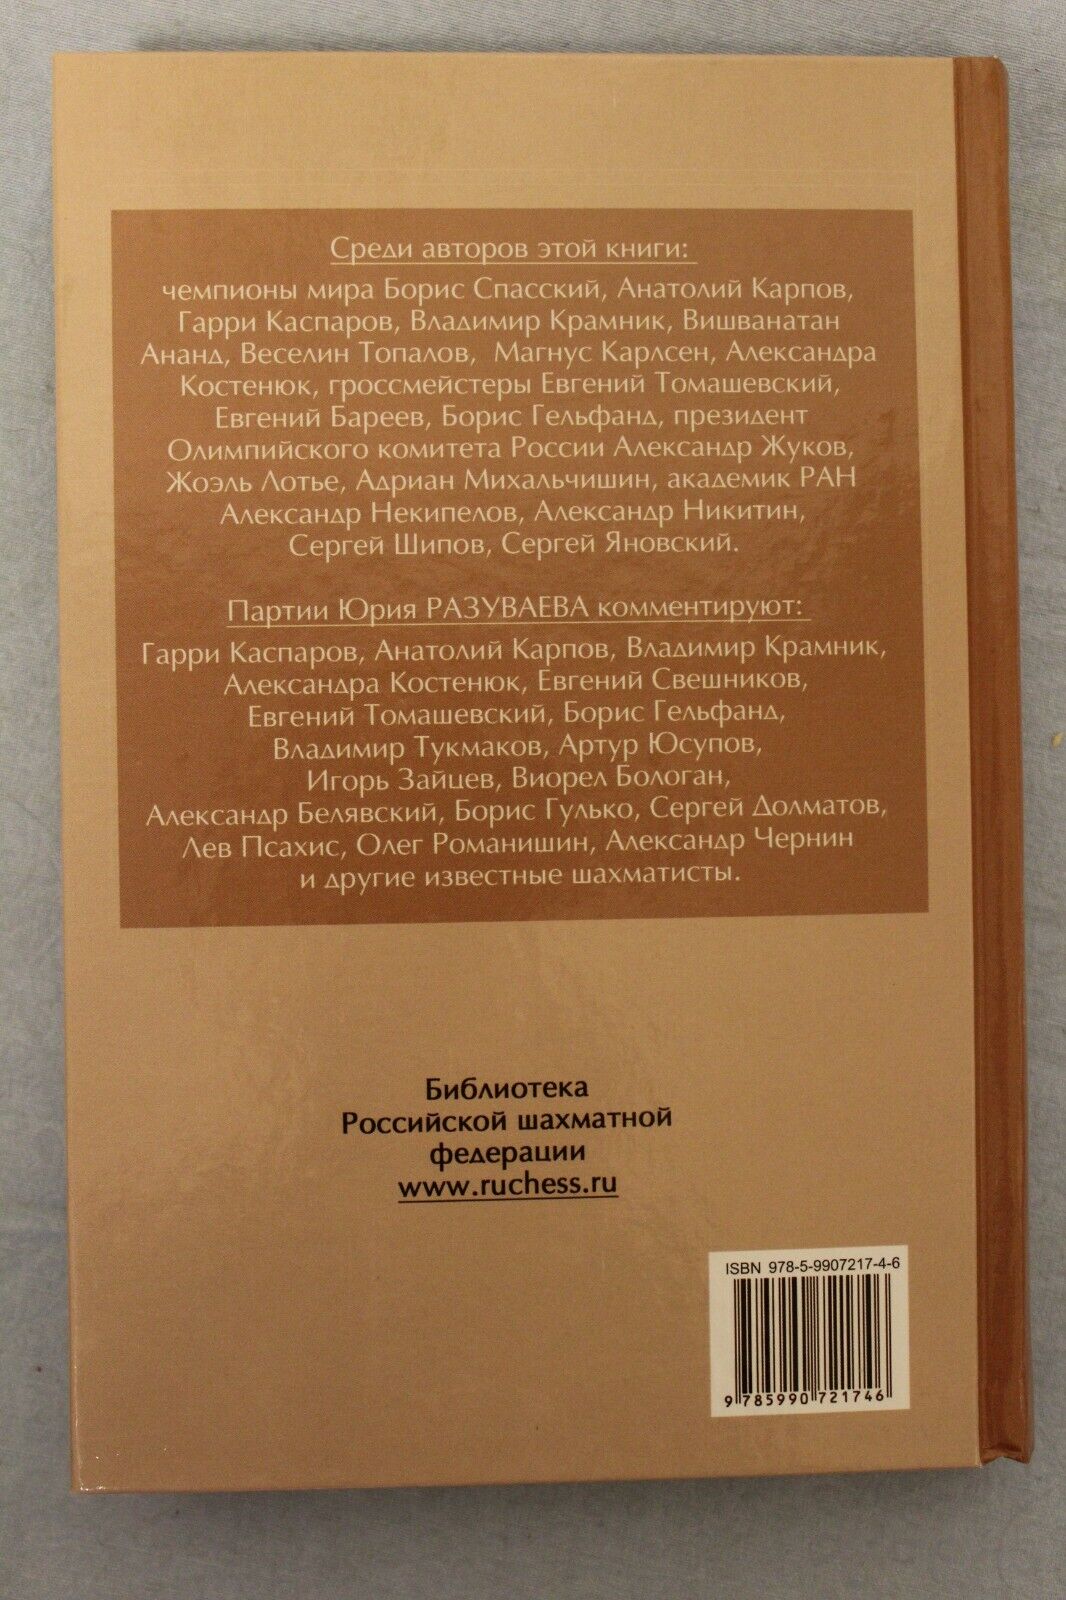 11015.Chess Book signed by B.Postovsky to R.Bilunova. Academic of Chess. Razuvaev